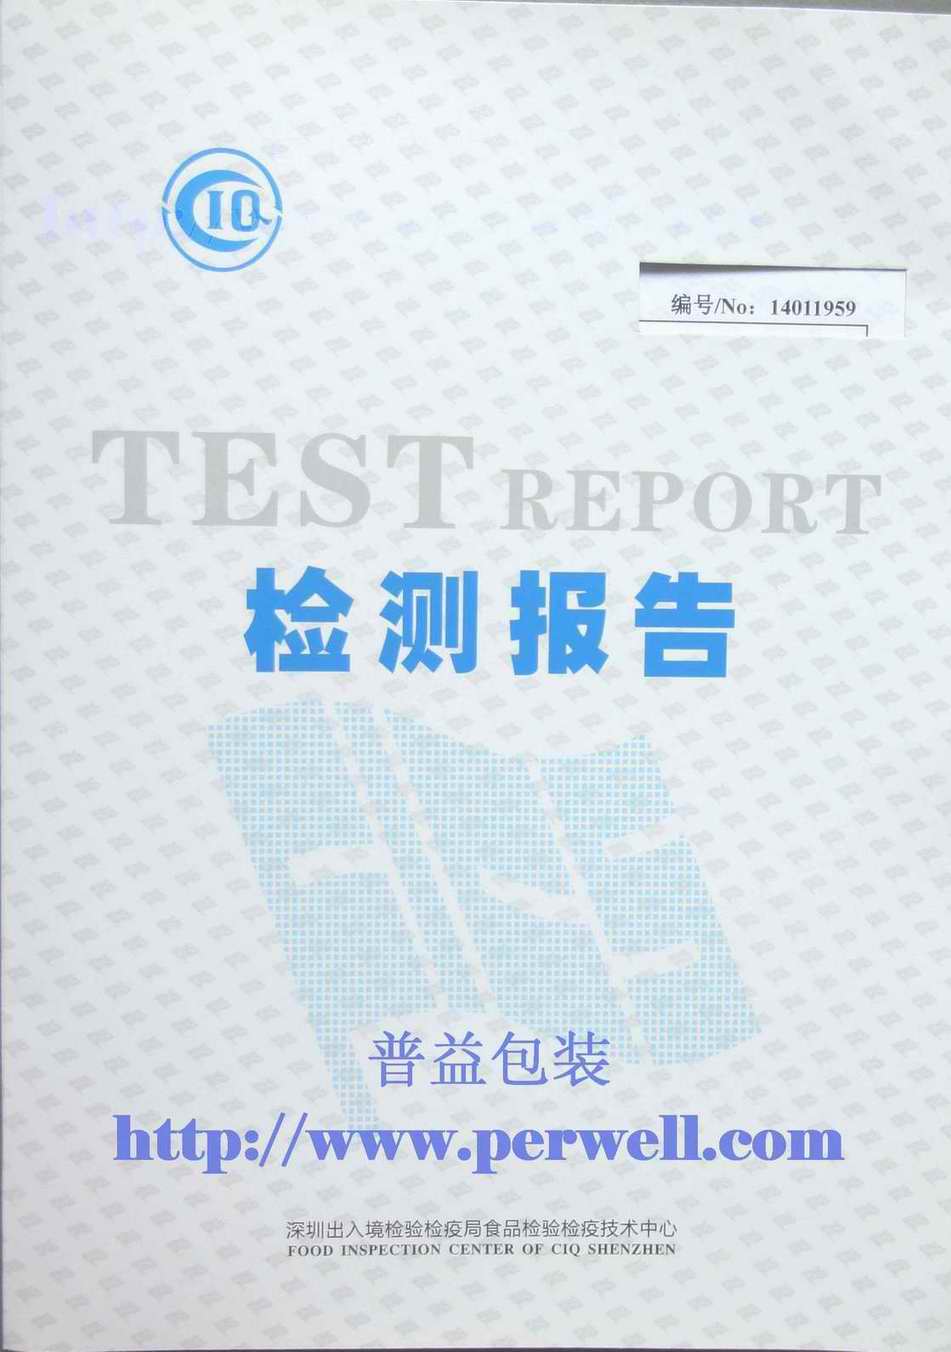 CIQ test report